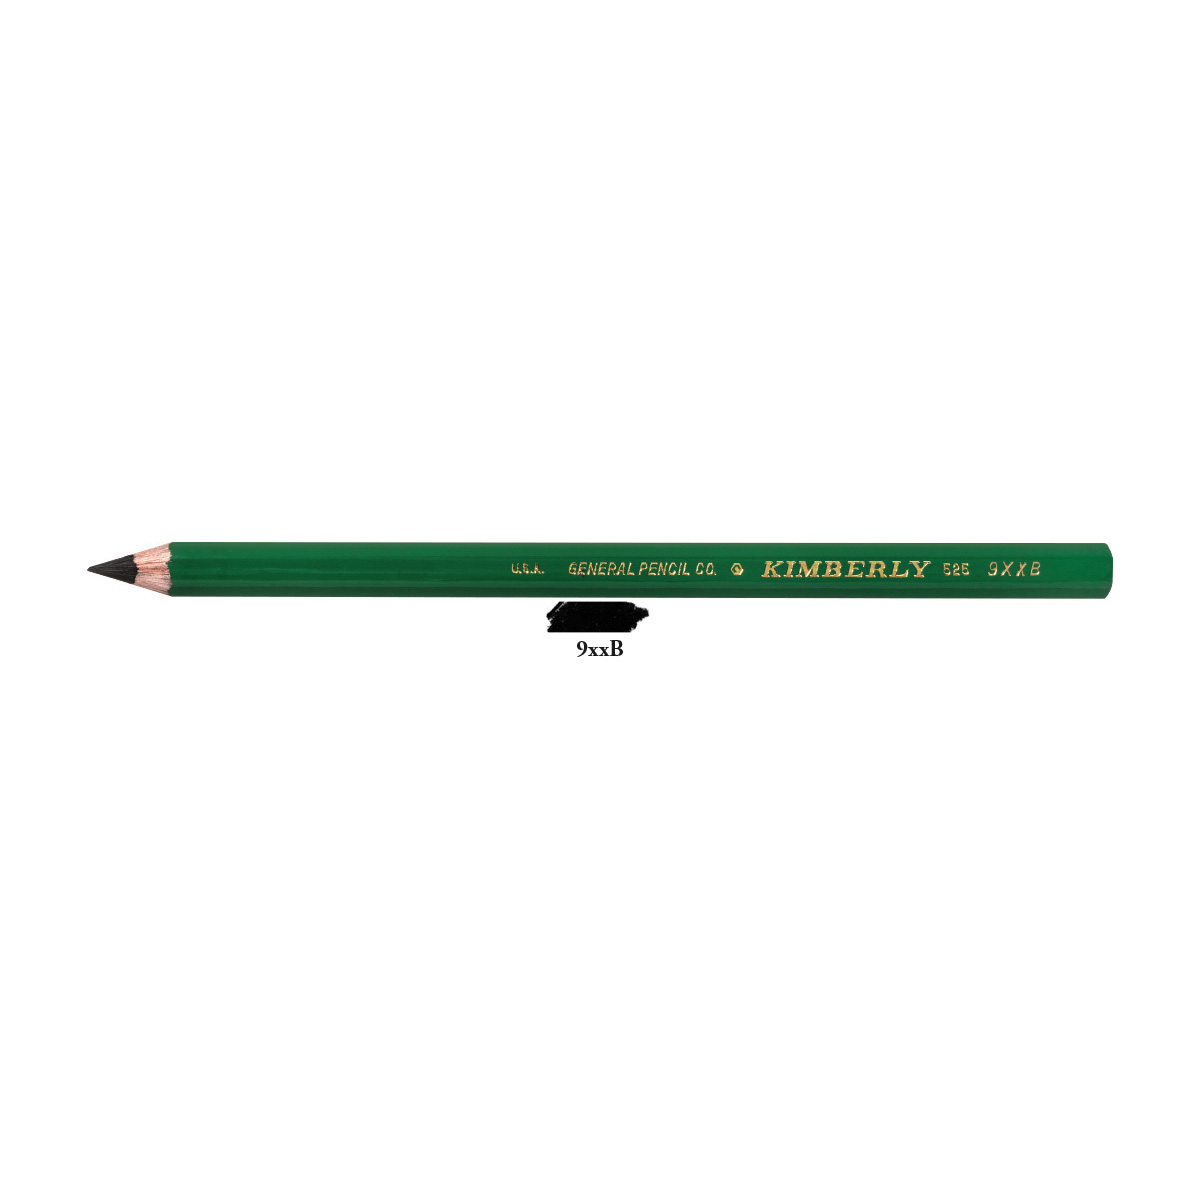 GENERAL PENCIL COMPANY Kimberly 525 525-9XXB Pencil, 9XXB Lead, Black Lead, Wood Barrel - 1